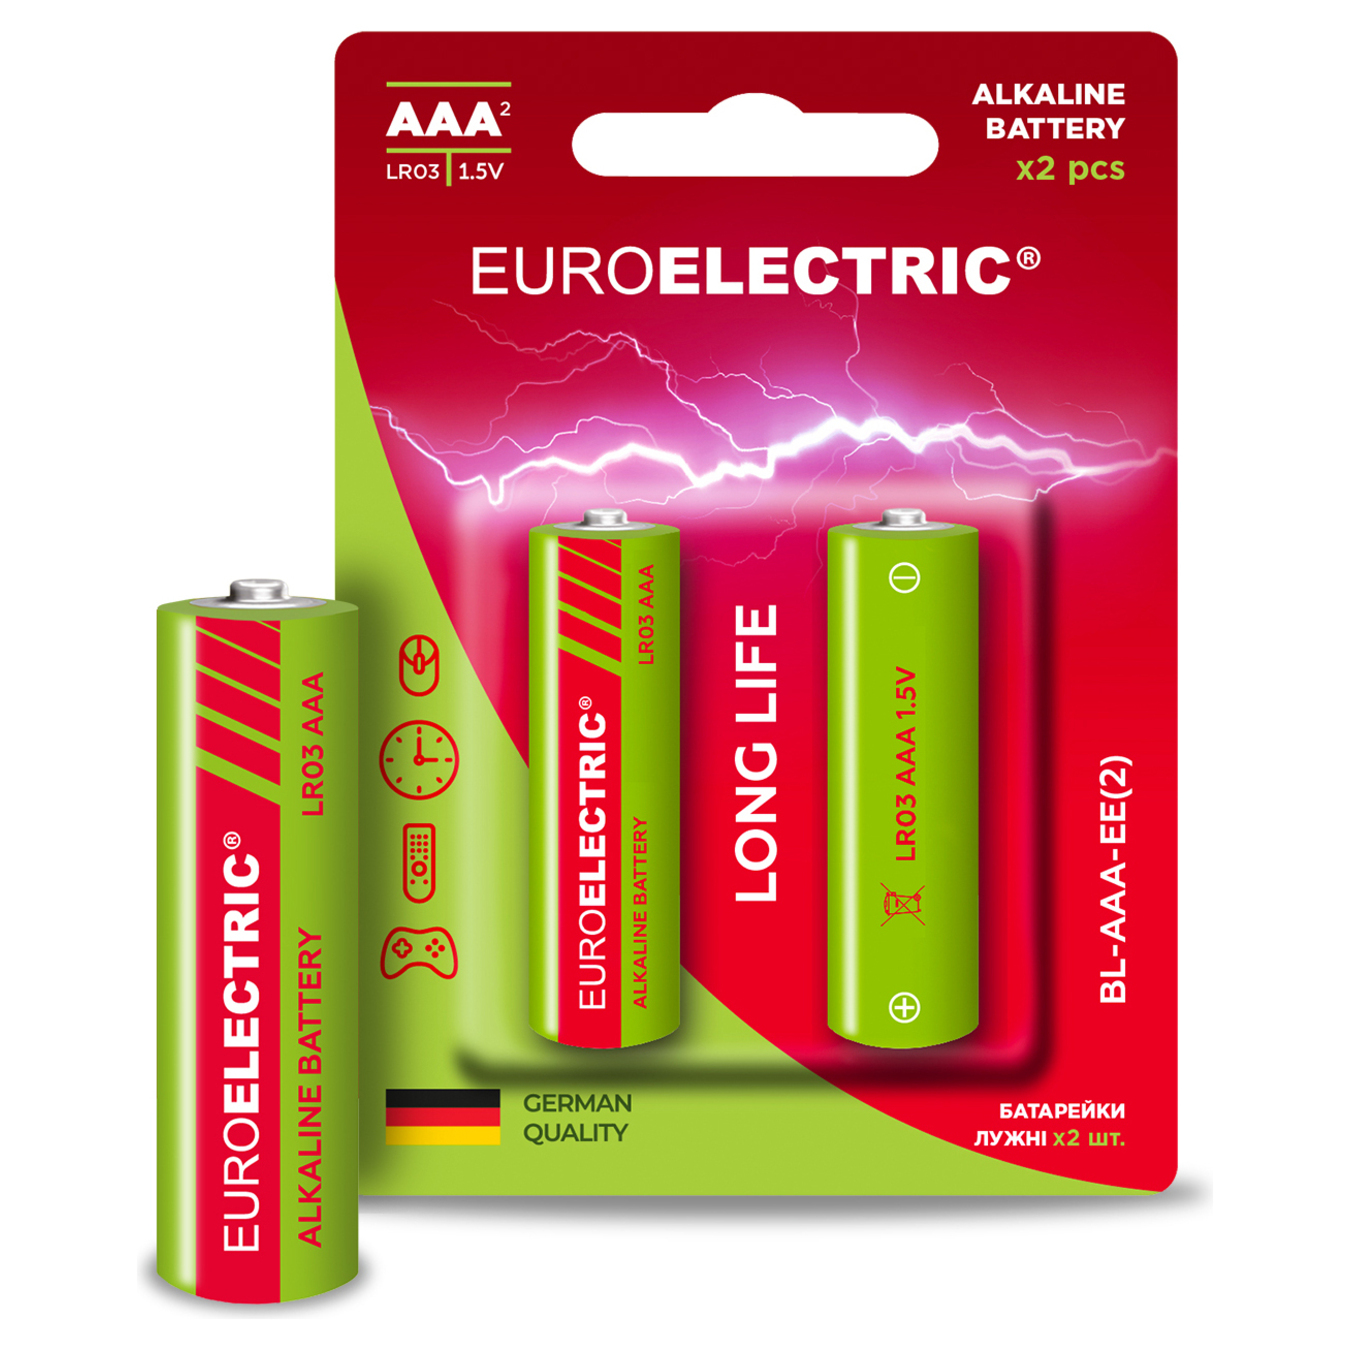 Alkaline batteries Euroelectric AAA LR03 1.5V 2pcs